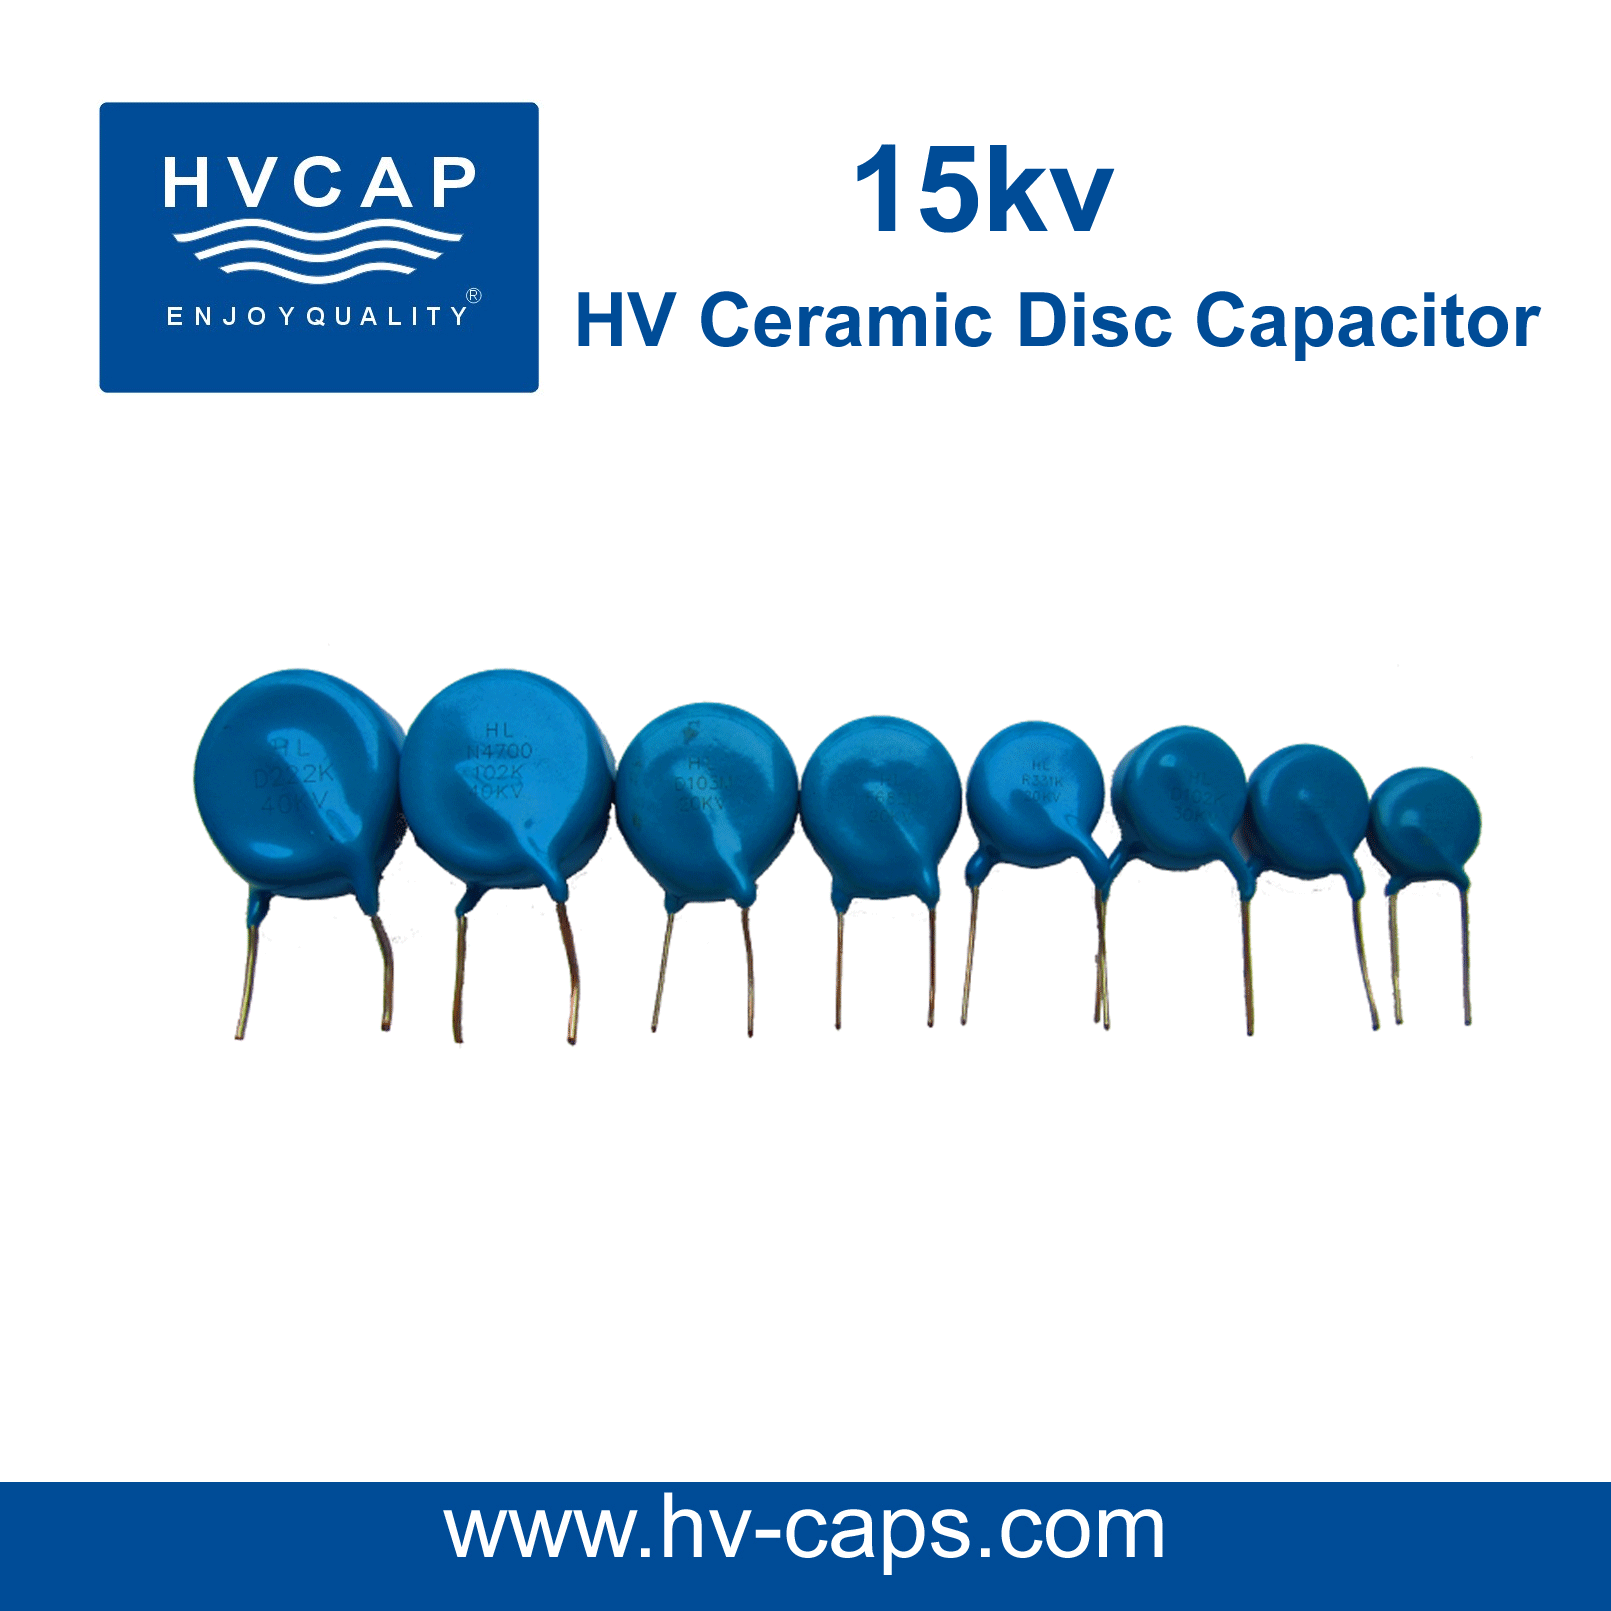 High Voltage Ceramic Capacitor 15kv detail specification._High Voltage